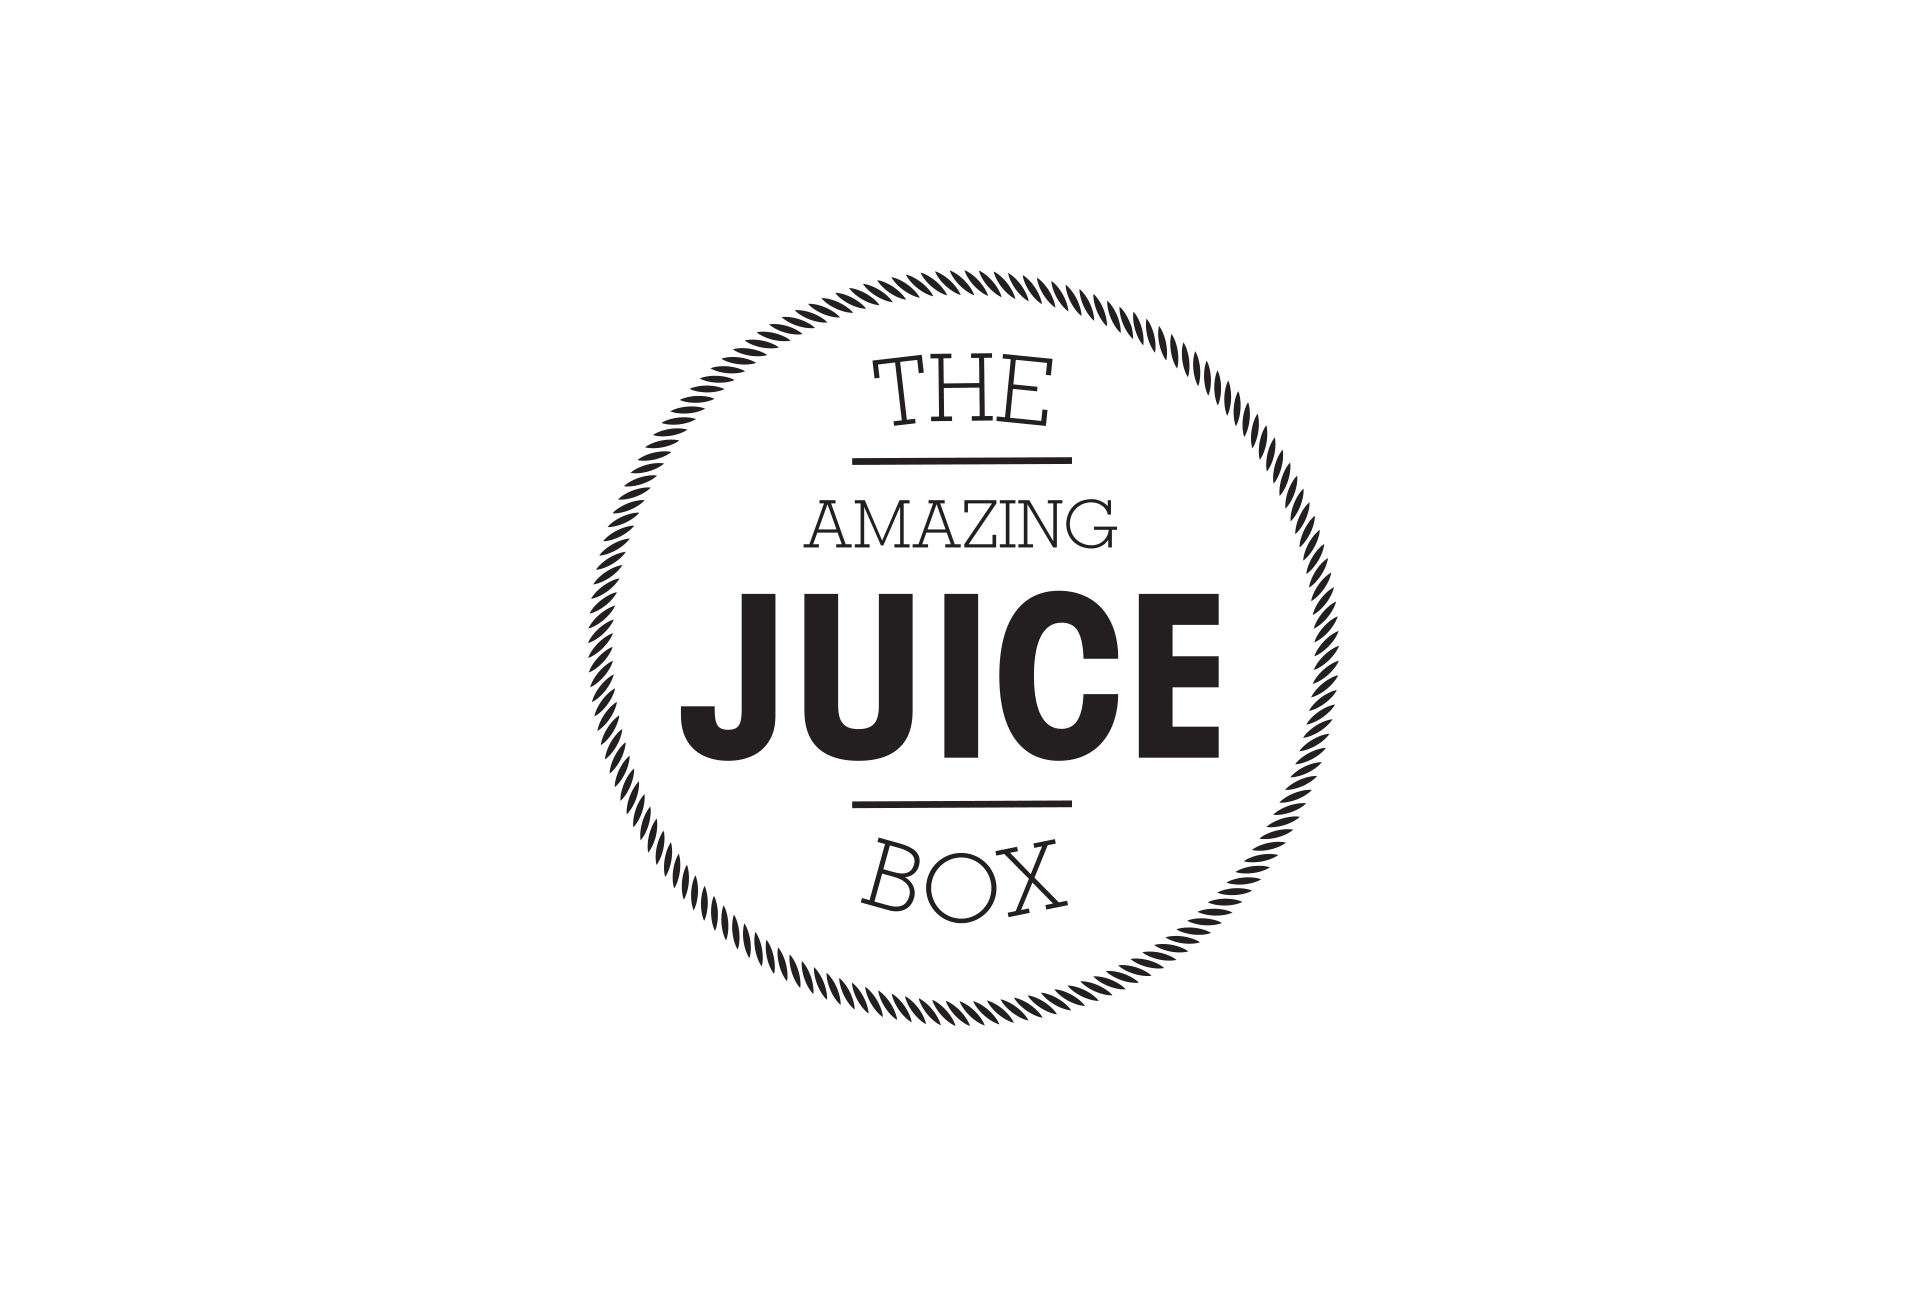 THE JUICE BOX